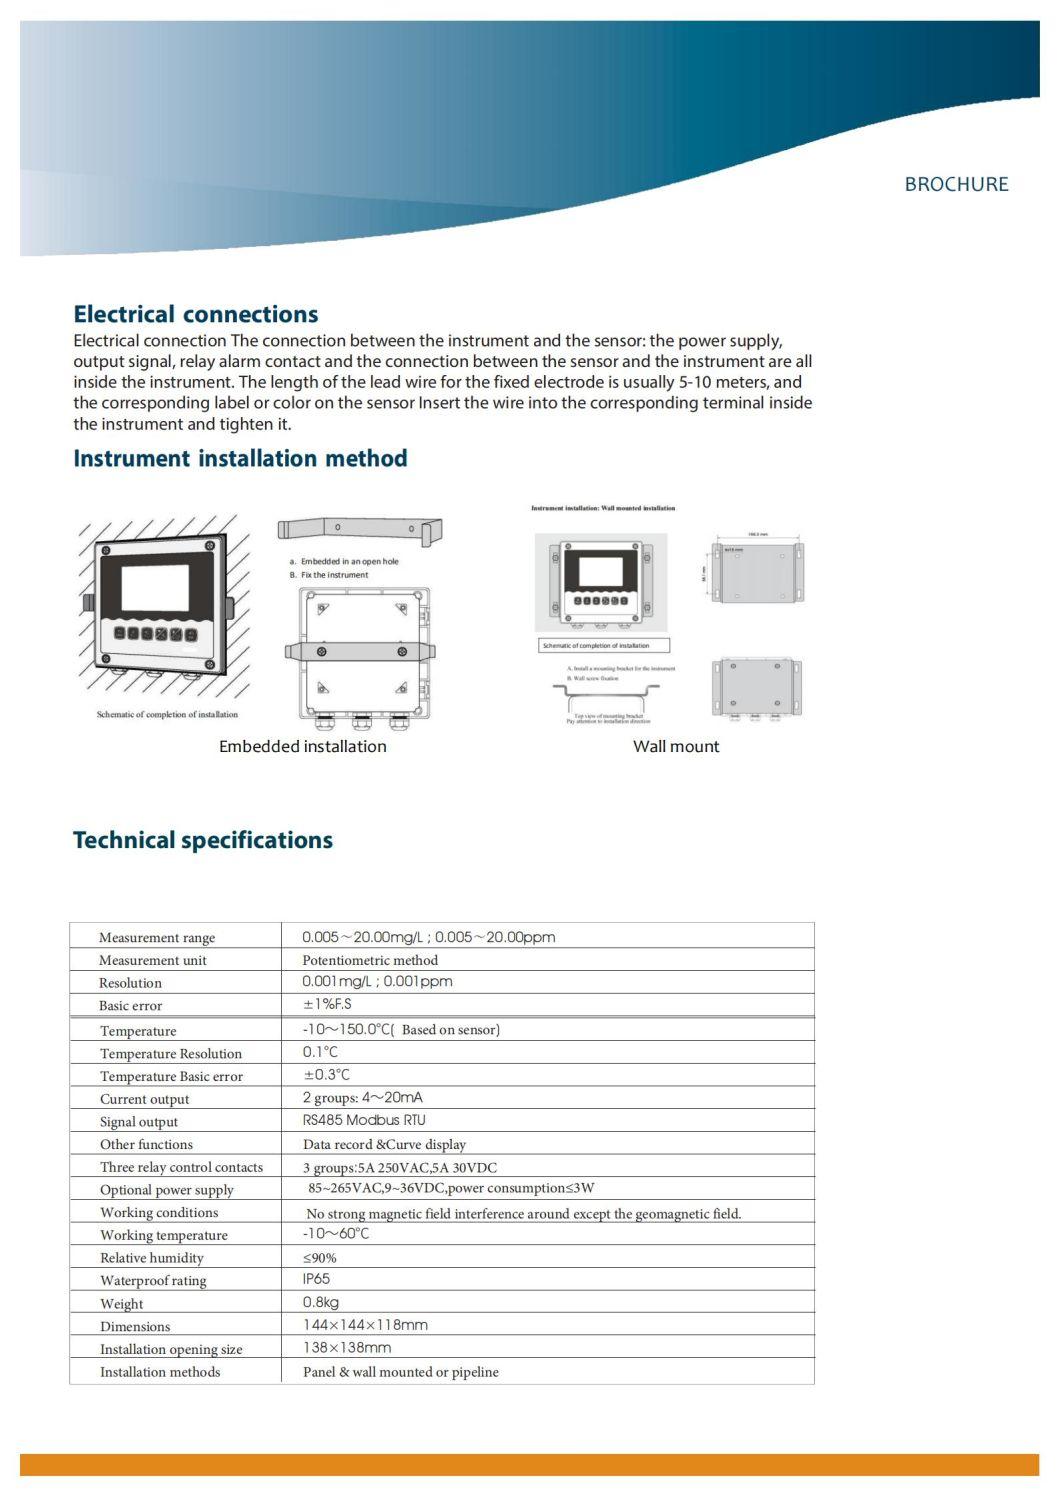 Industrial Online Disinfactant Water Residual Chlorine Meter Analyzer Transmitter